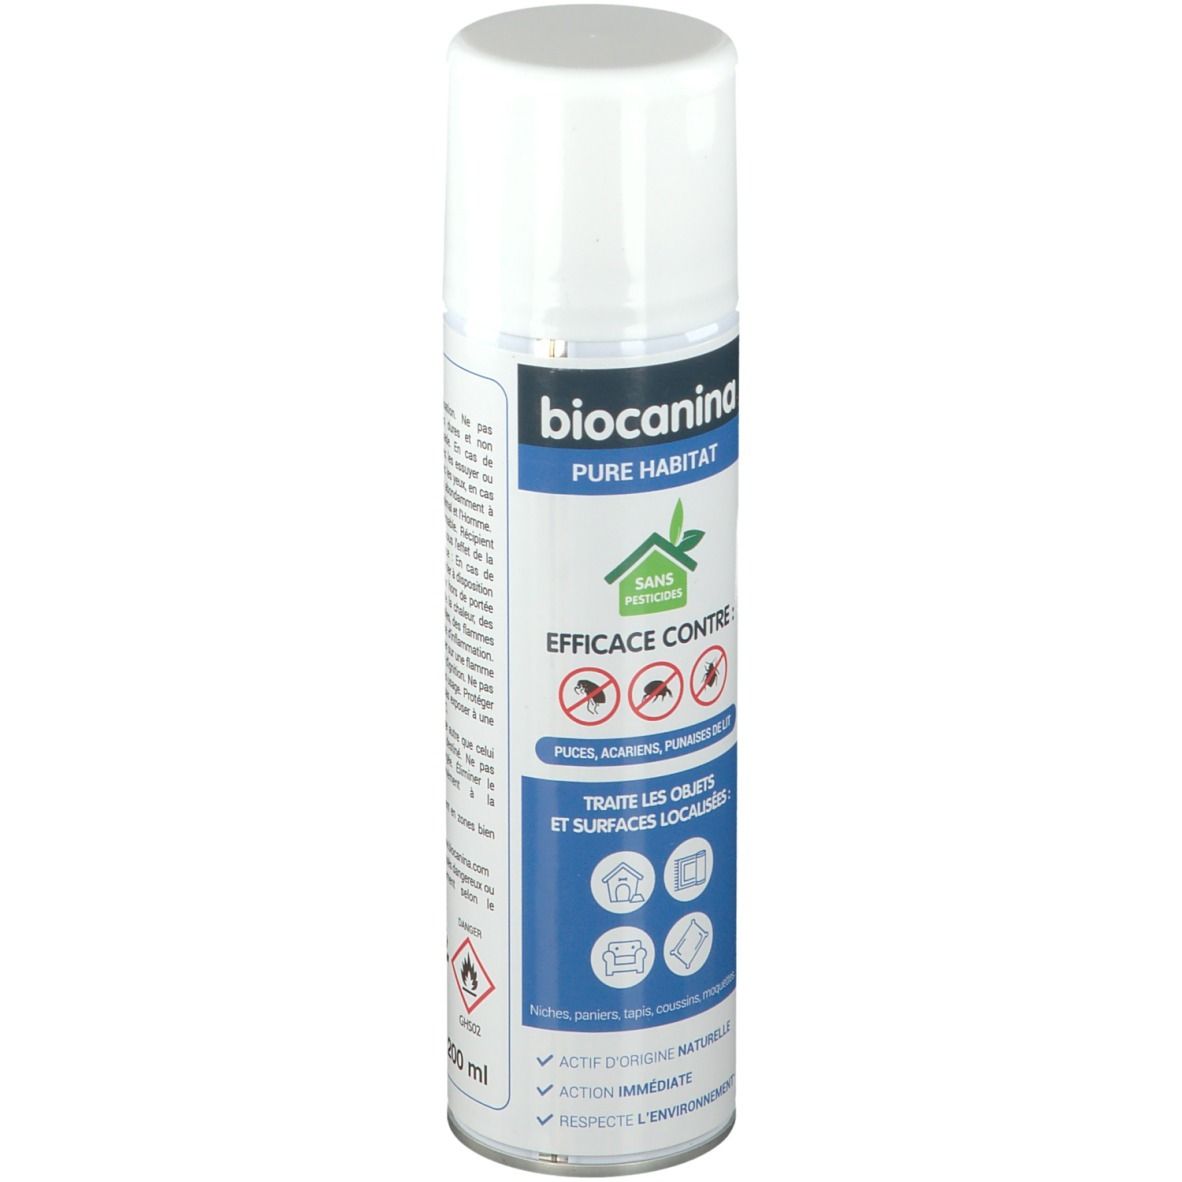 Pure habitat spray antiparasitaire Biocanina - spray de 200 ml